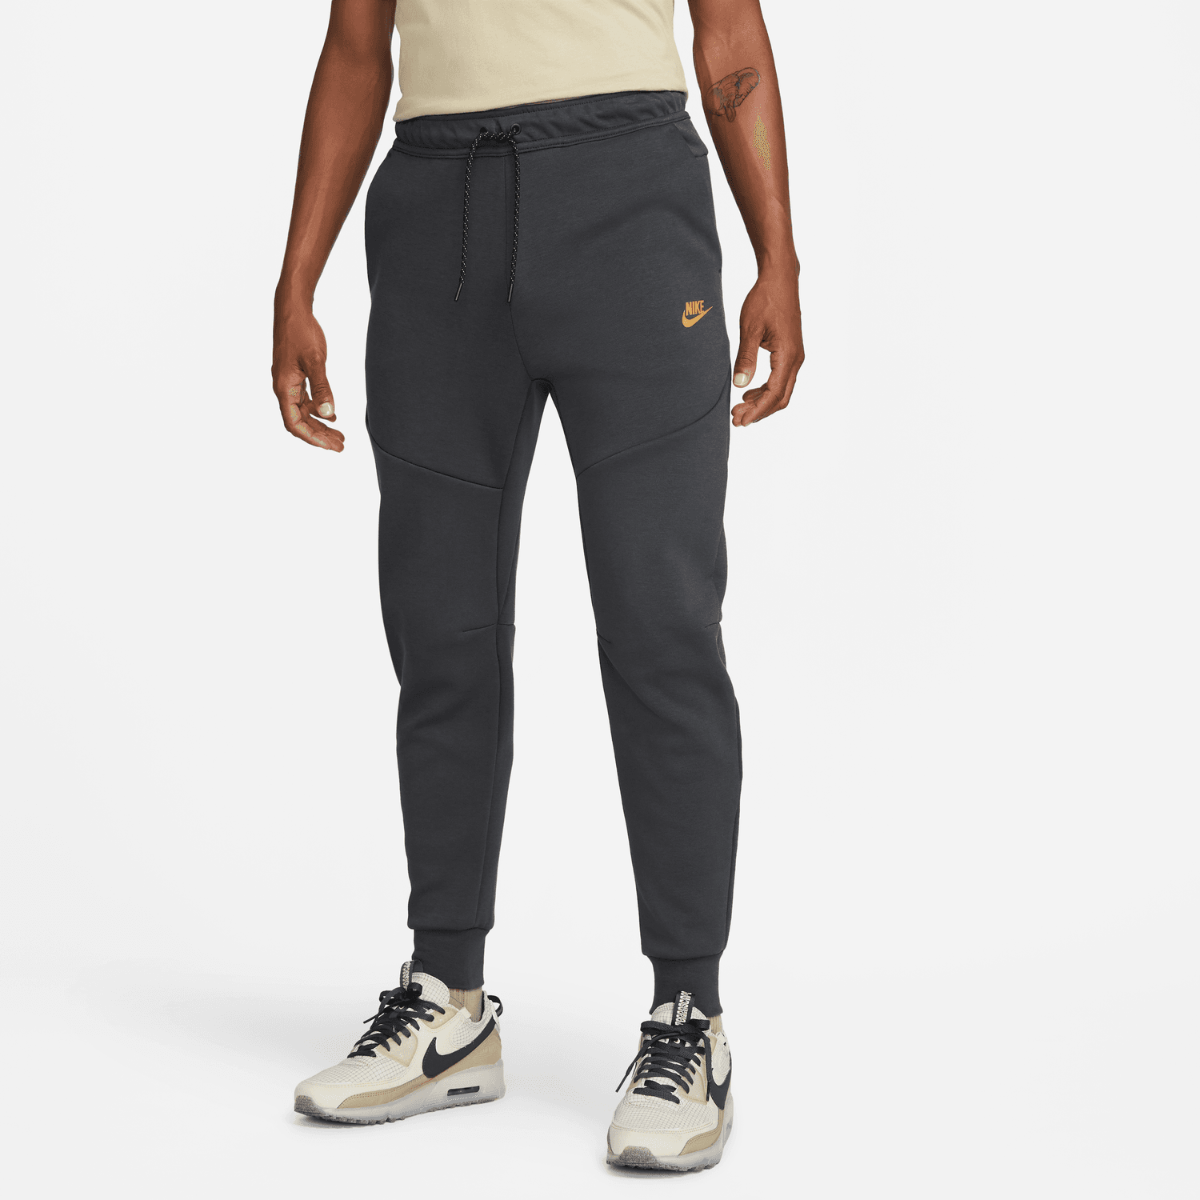 Joggers Nike Sportswear Tech Fleece - Grigio/Nero/Oro